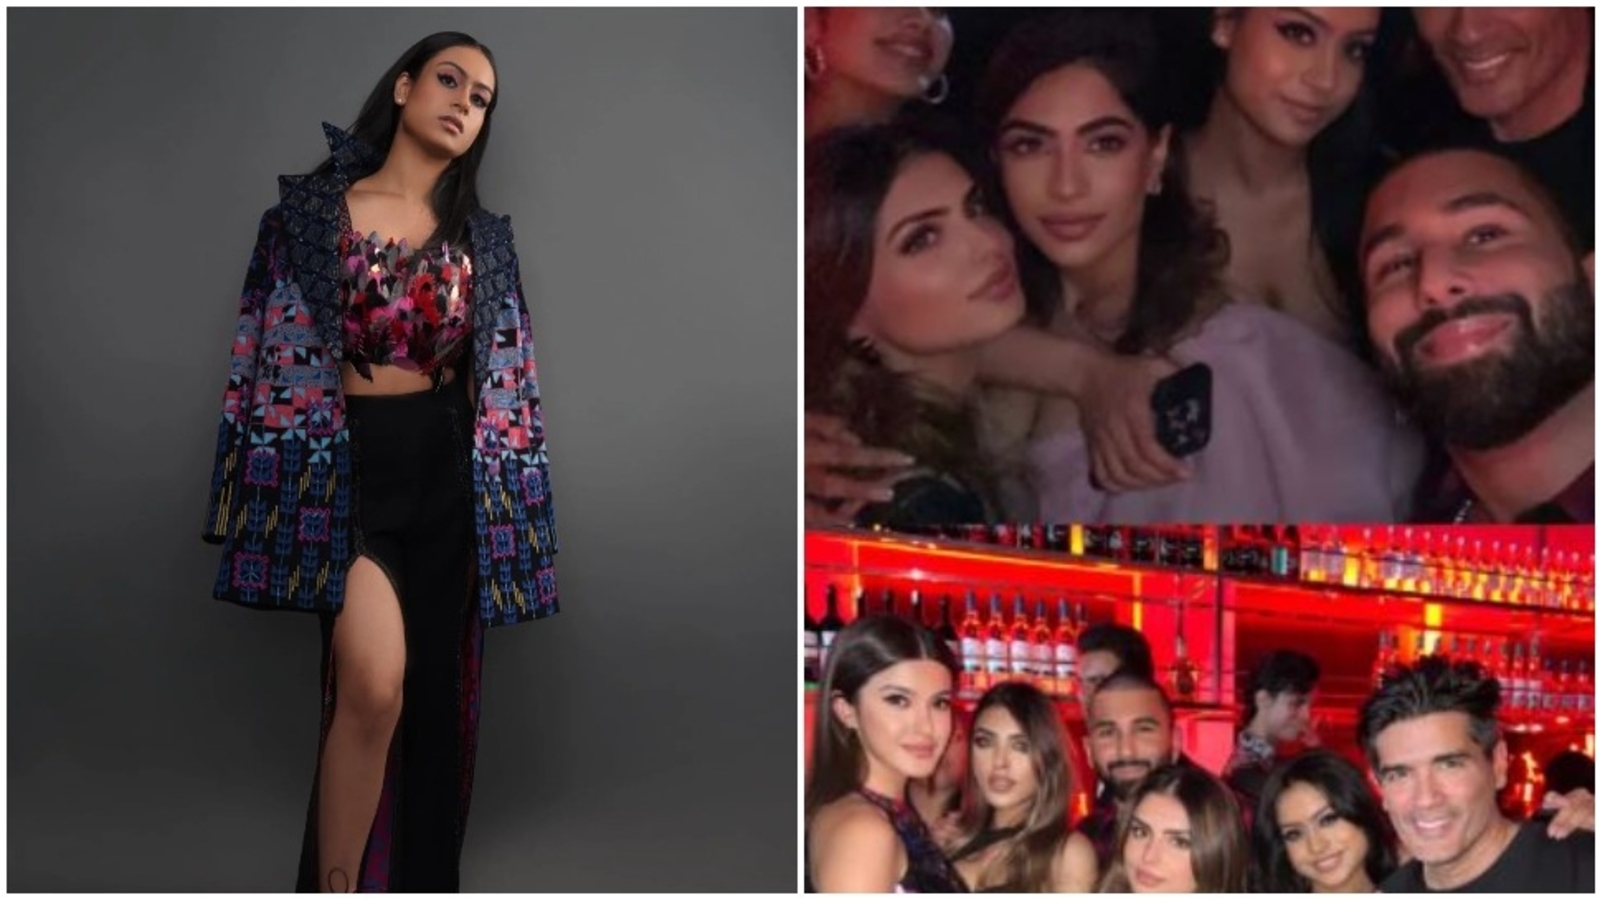 Sexy Kajol Ki Video - Nysa poses in high-slit outfit, fan says: 'She looks like her mom Kajol' |  Bollywood - Hindustan Times